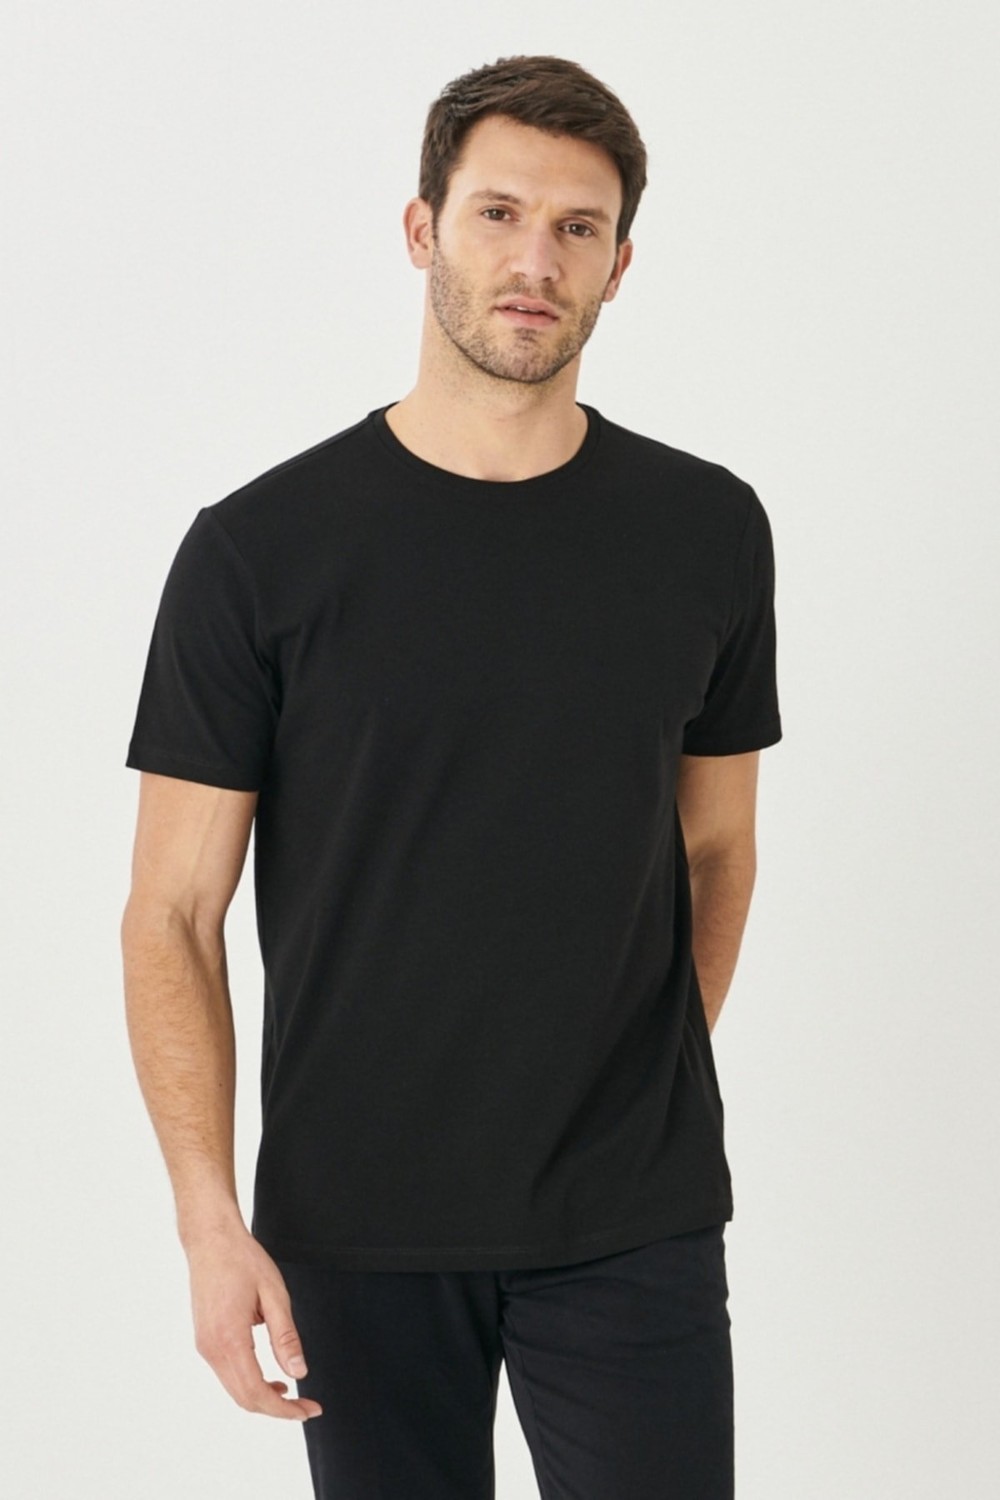 ALTINYILDIZ CLASSICS Men's Black 360-Degree Flexibility in All Directions, Slim Fit Slim Fit Crewneck T-Shirt.